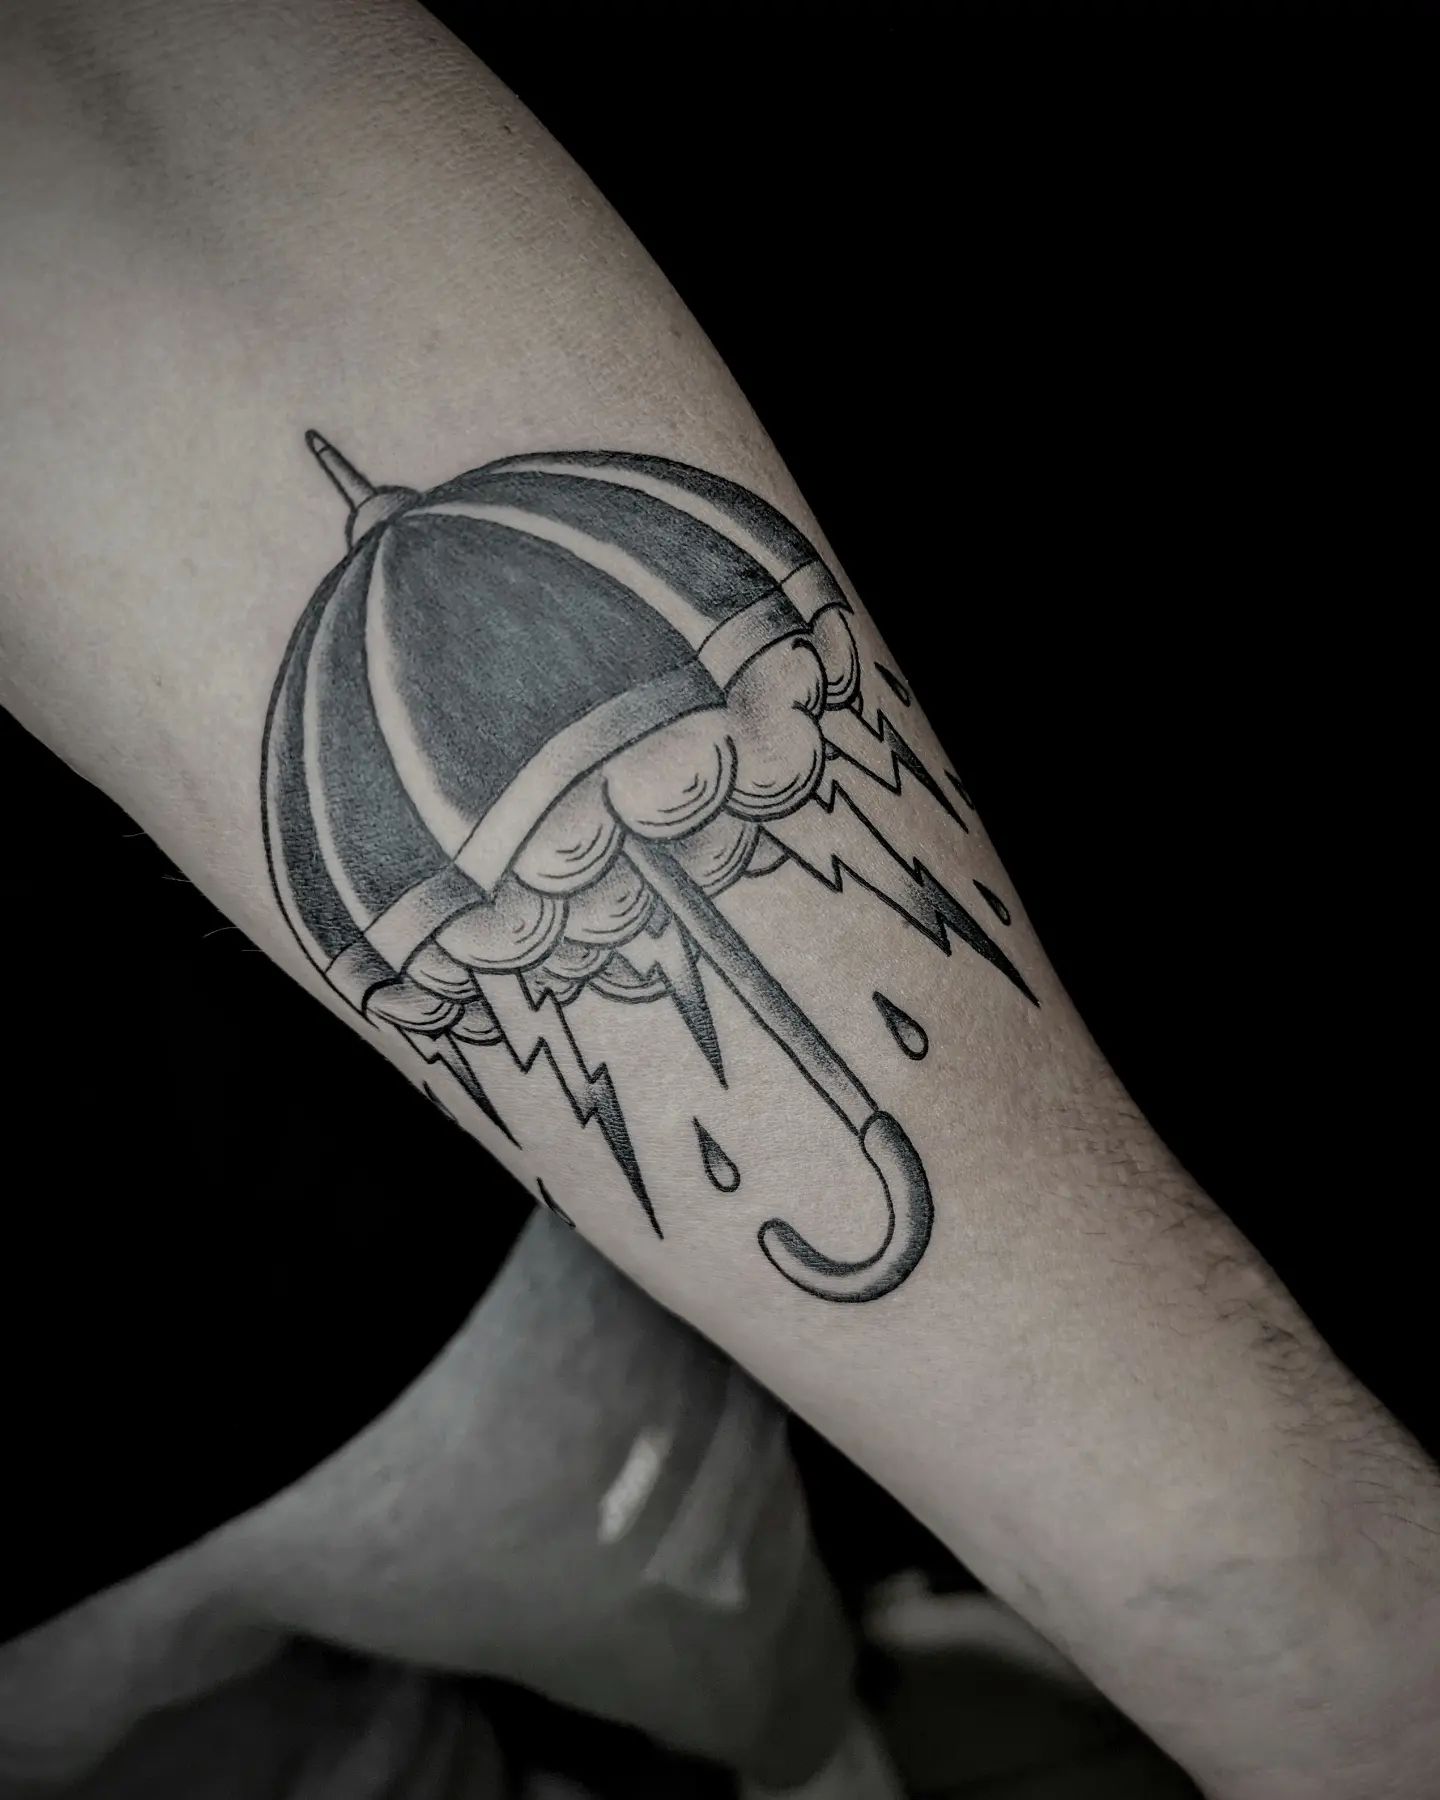 Umbrella for homey @davmey #tattoo #tattooartist #neotrad #ink #neotradeu #tatto